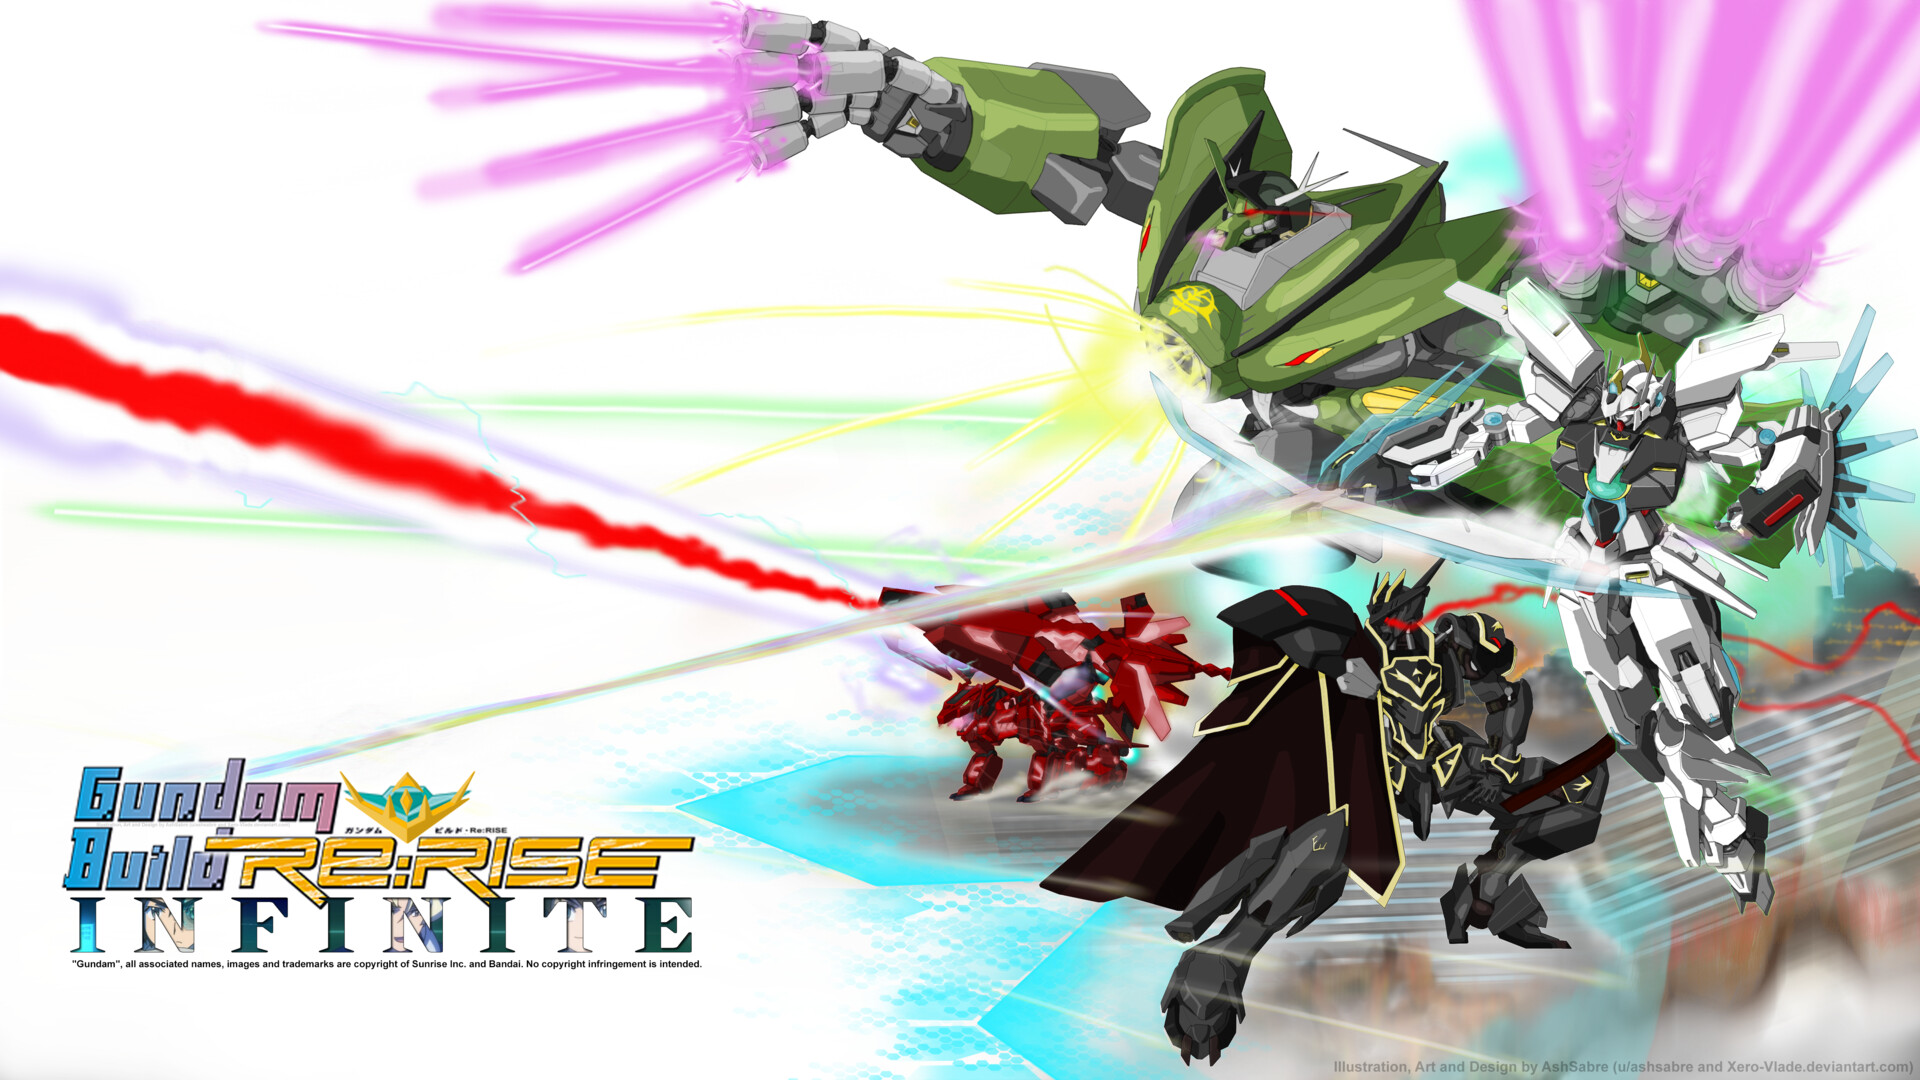 Gundam Build Divers Re:Rise 